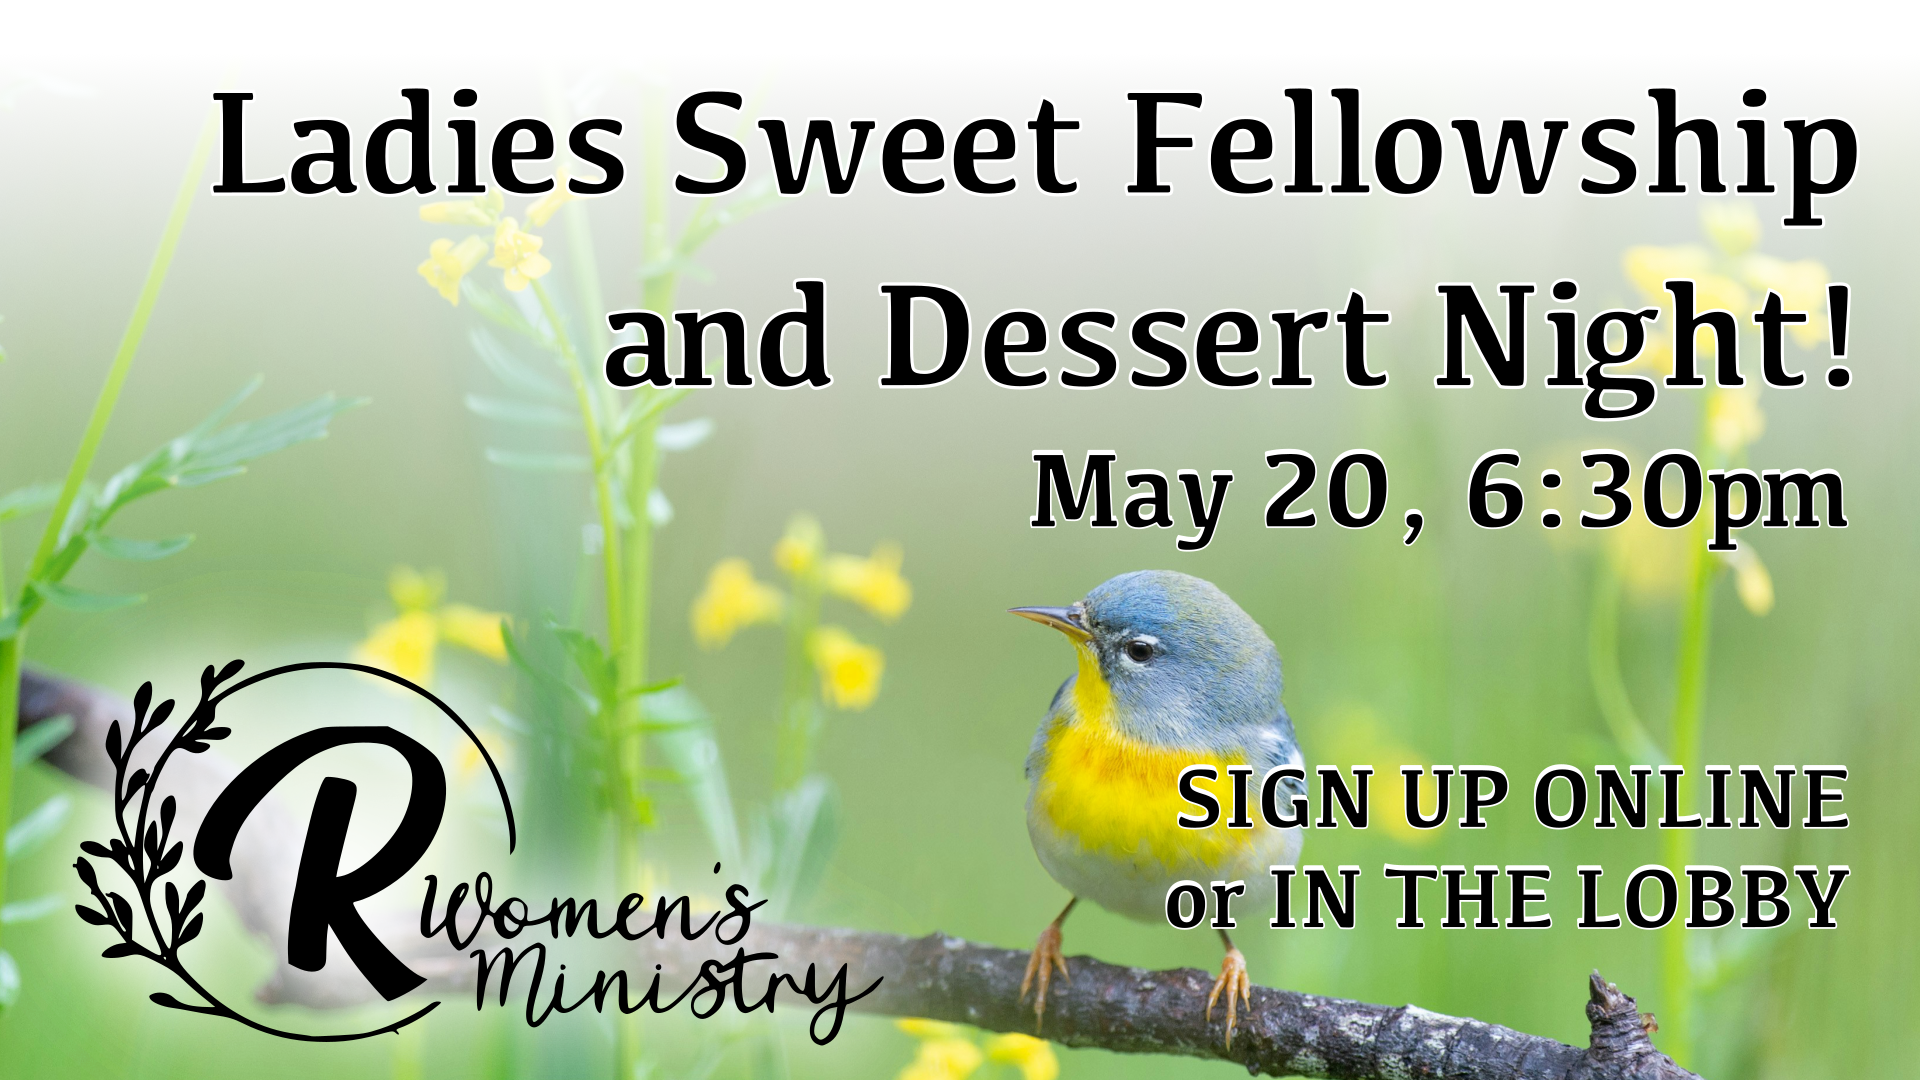 Ladies Sweet Fellowship and Dessert Night!